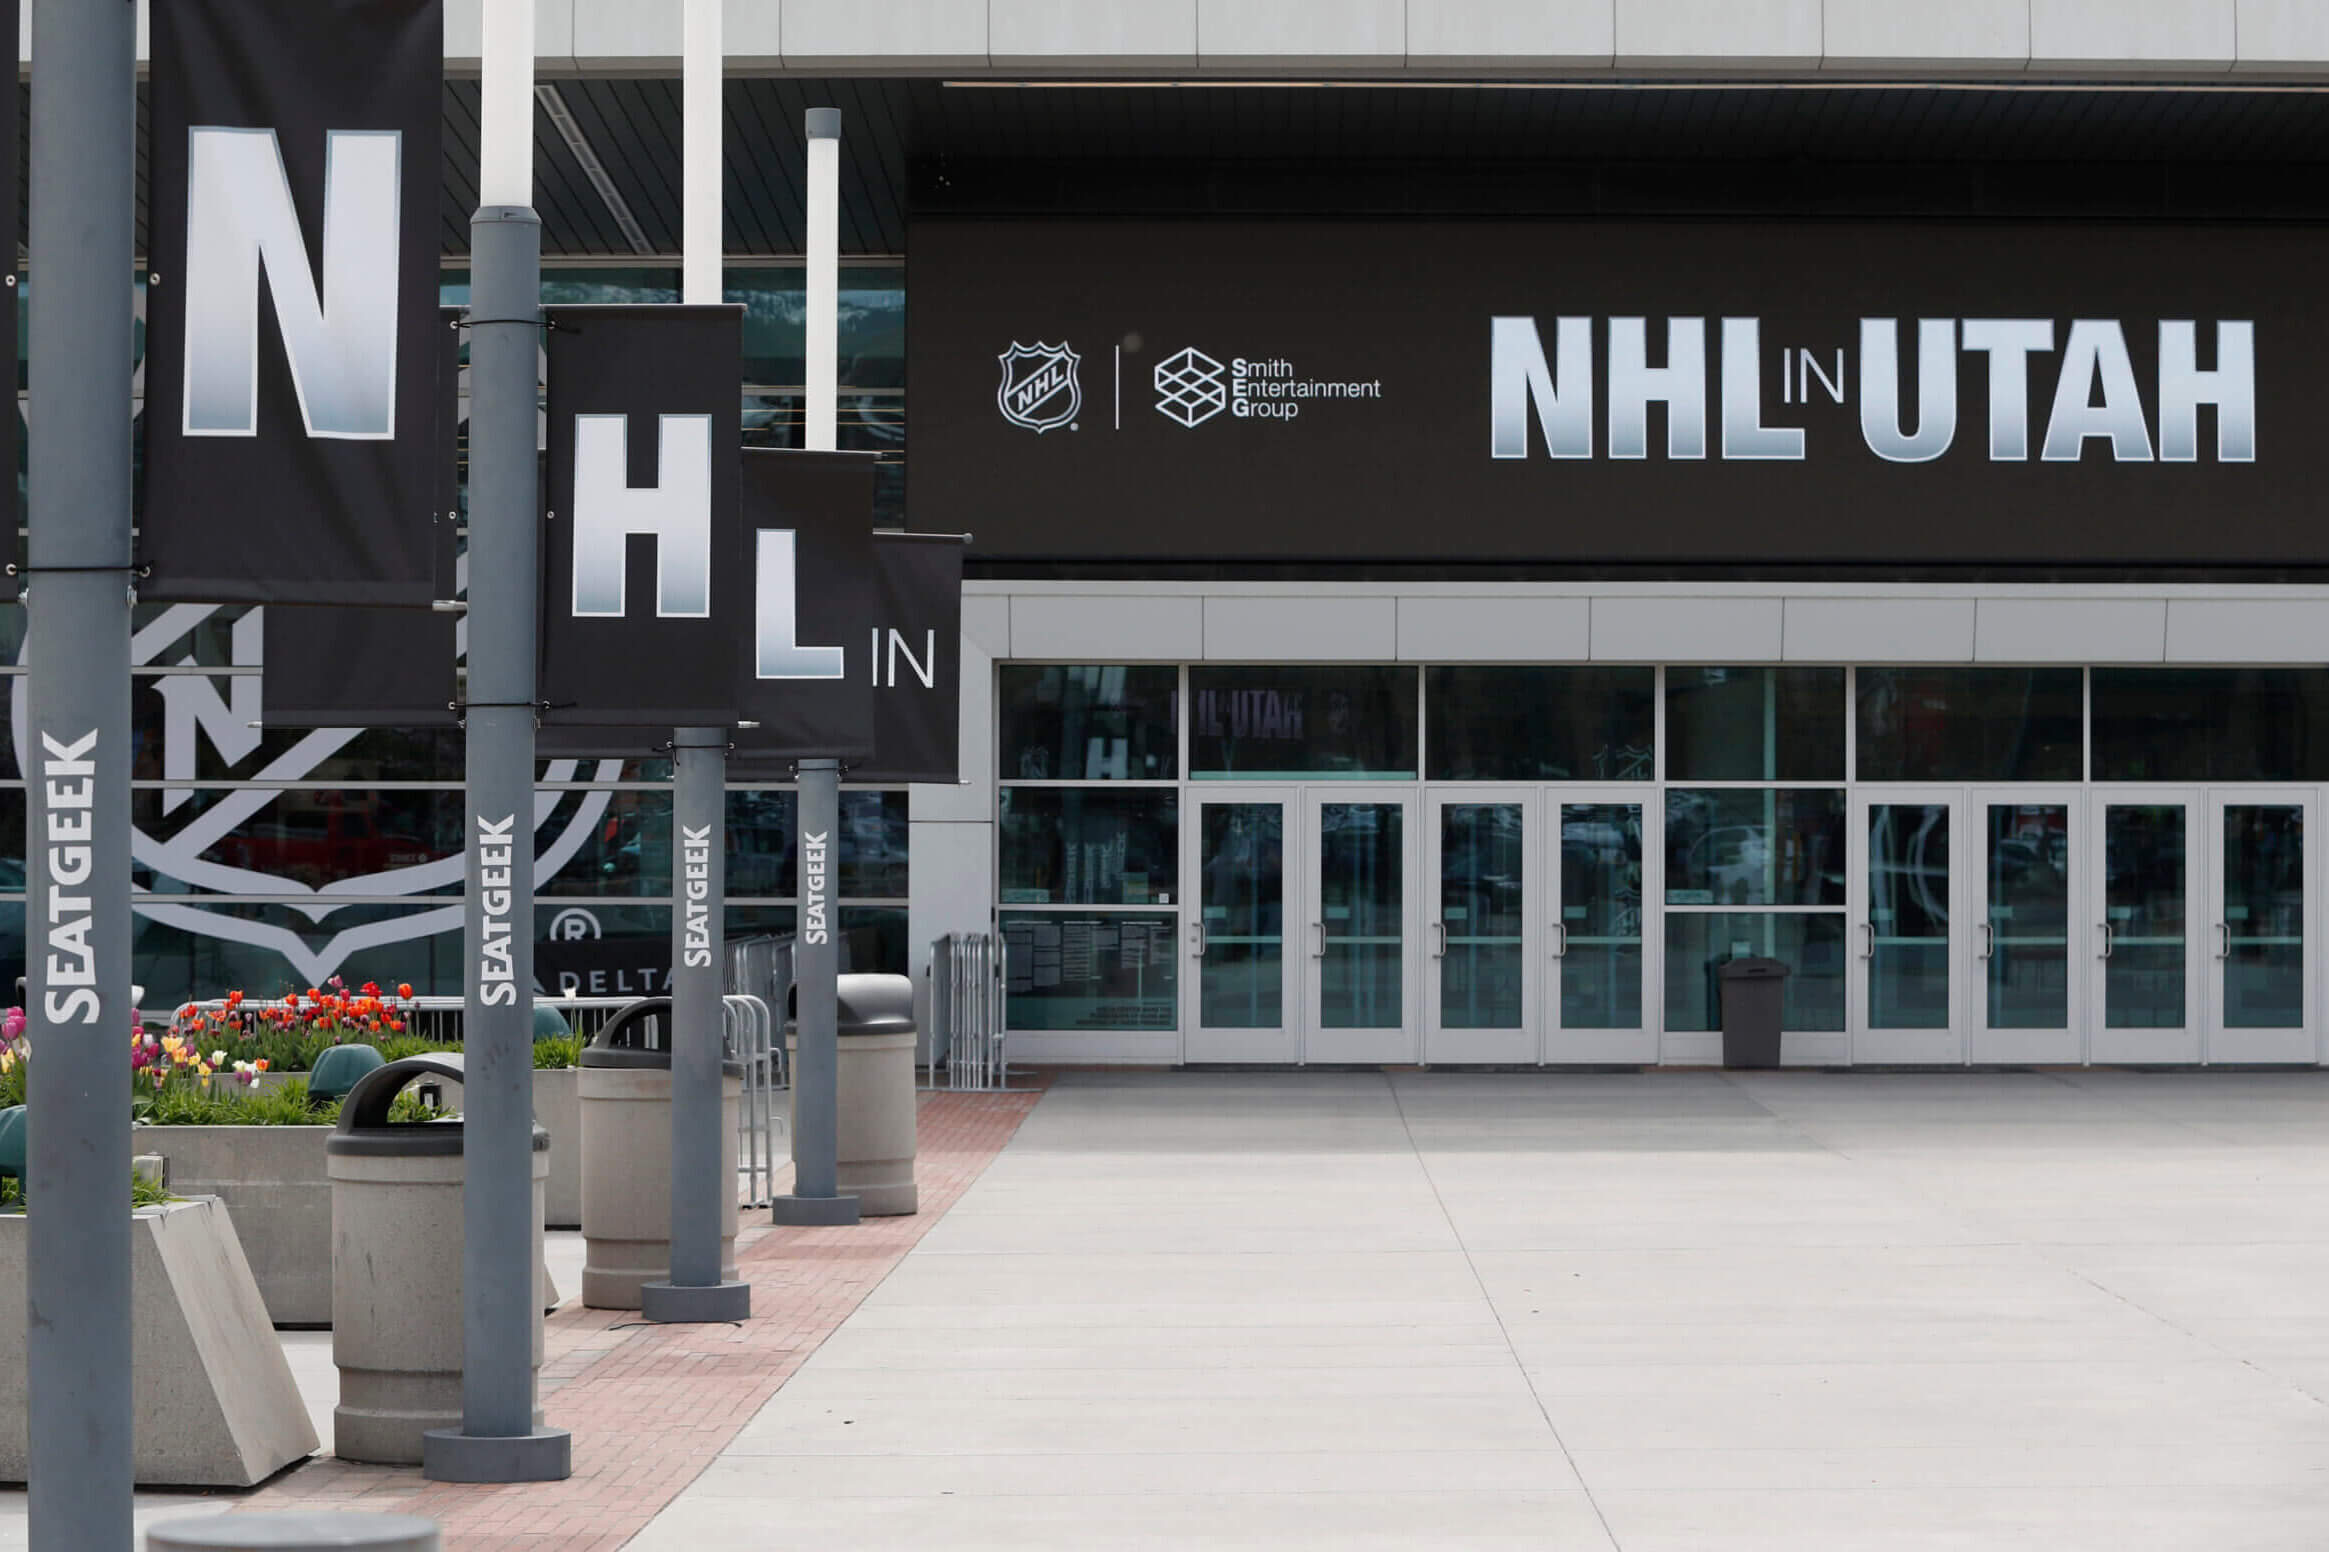 Utah's NHL team narrows field down to six potential names